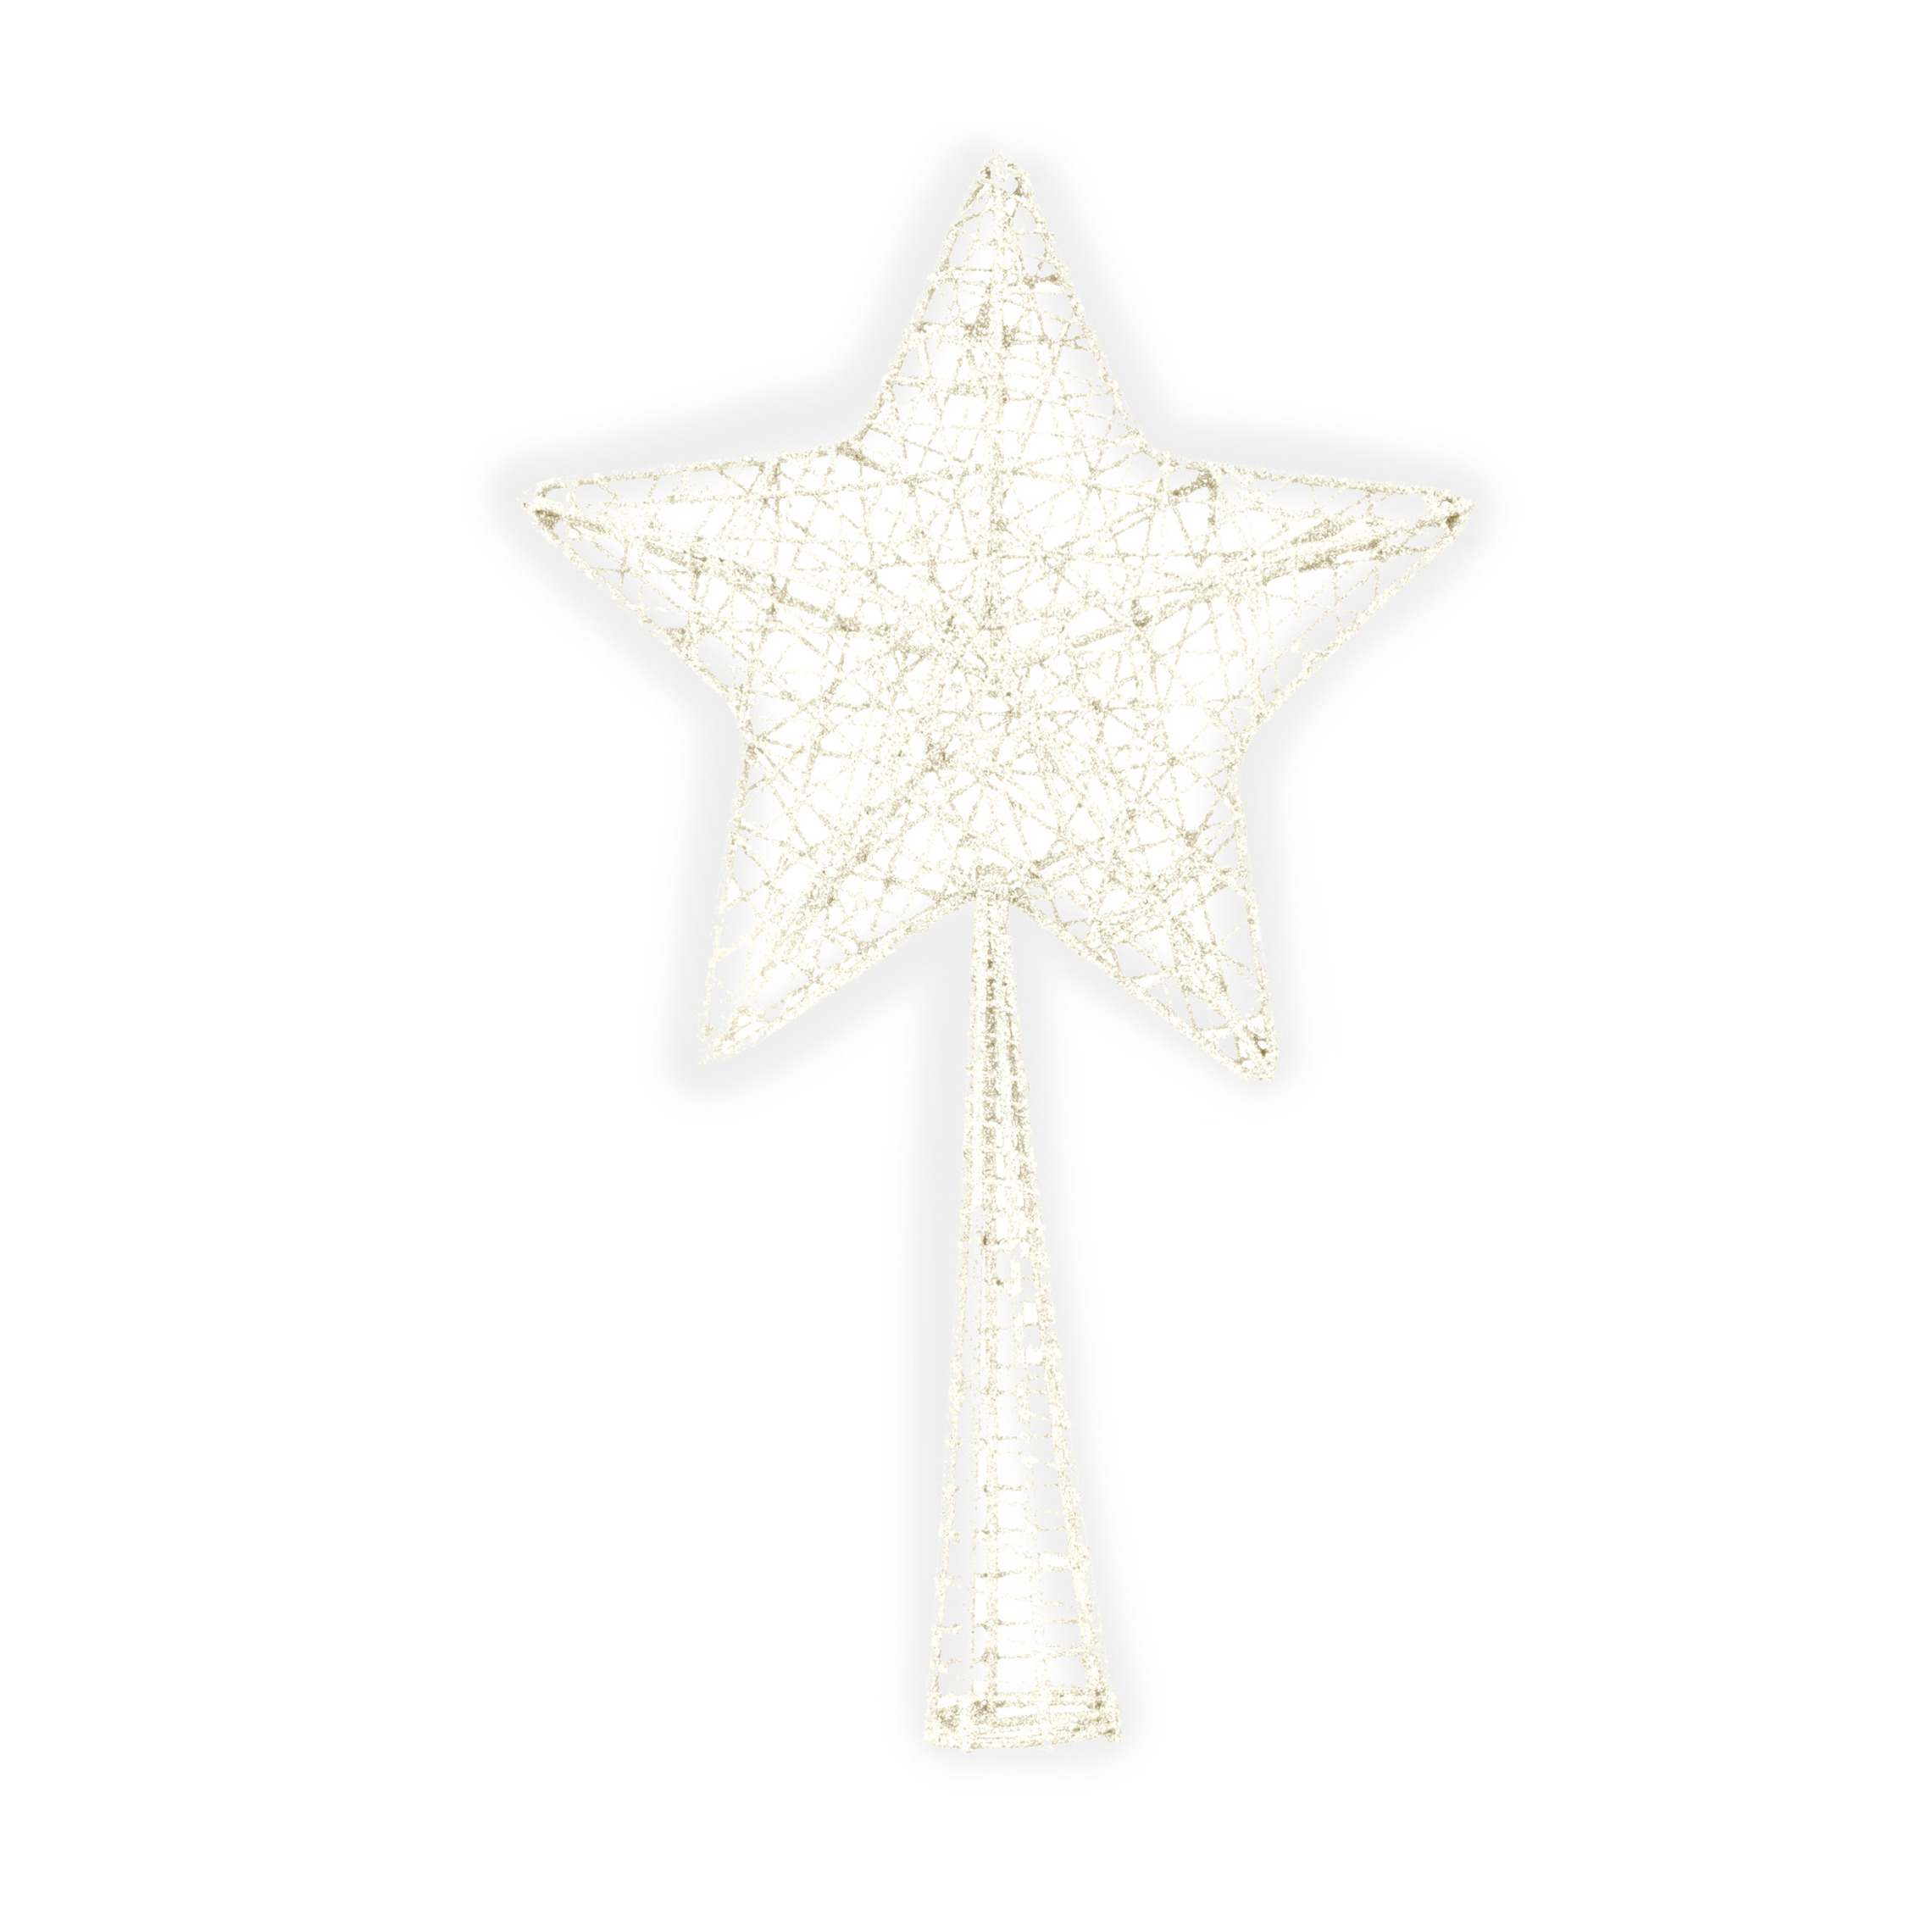 Kunststof ster piek-kerstboom topper glitter wit 28 cm